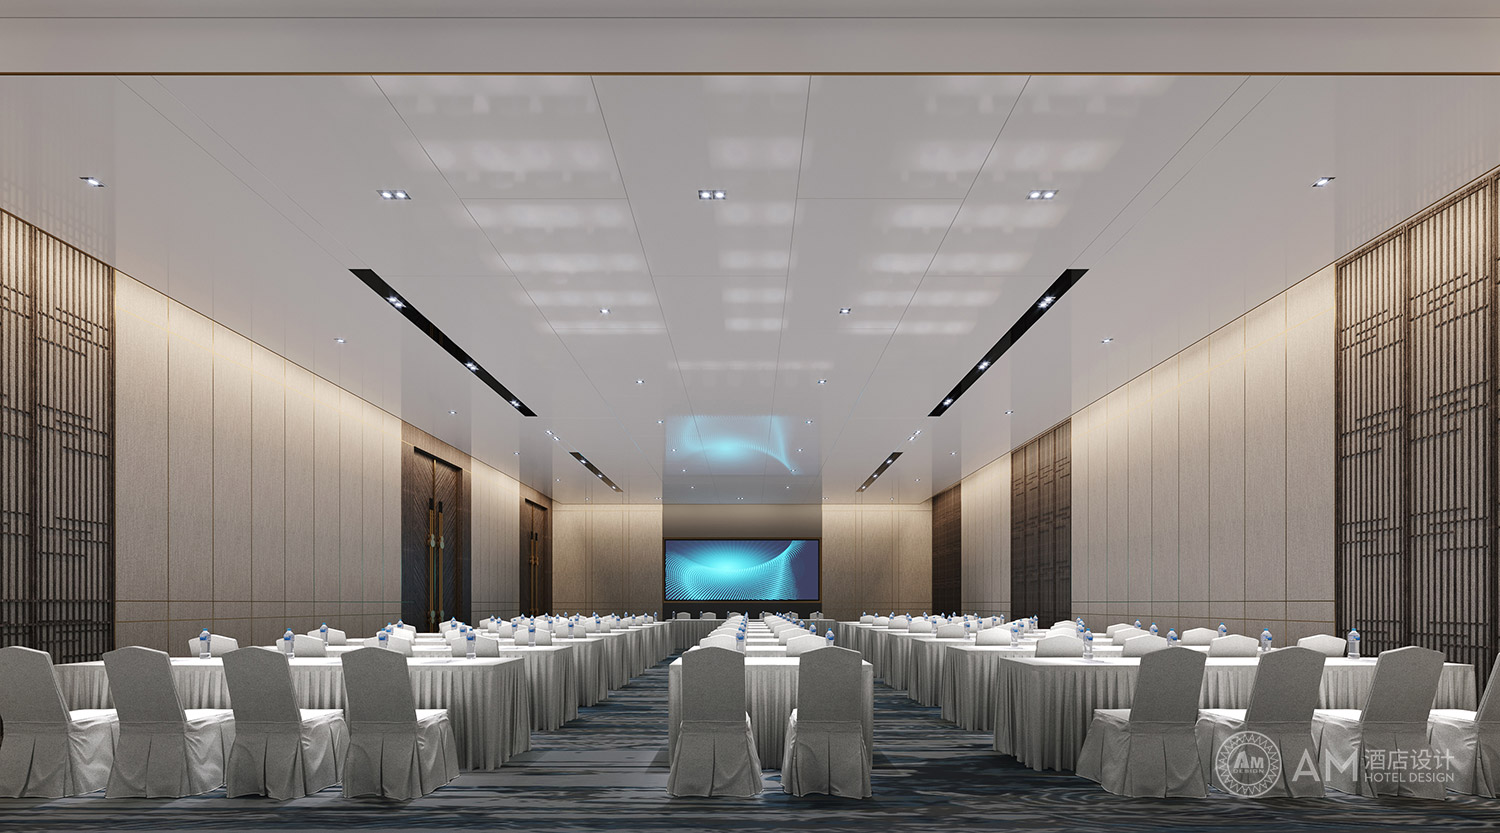 AM DESIGN | Conference hall design of Baida Wanmei Hotel